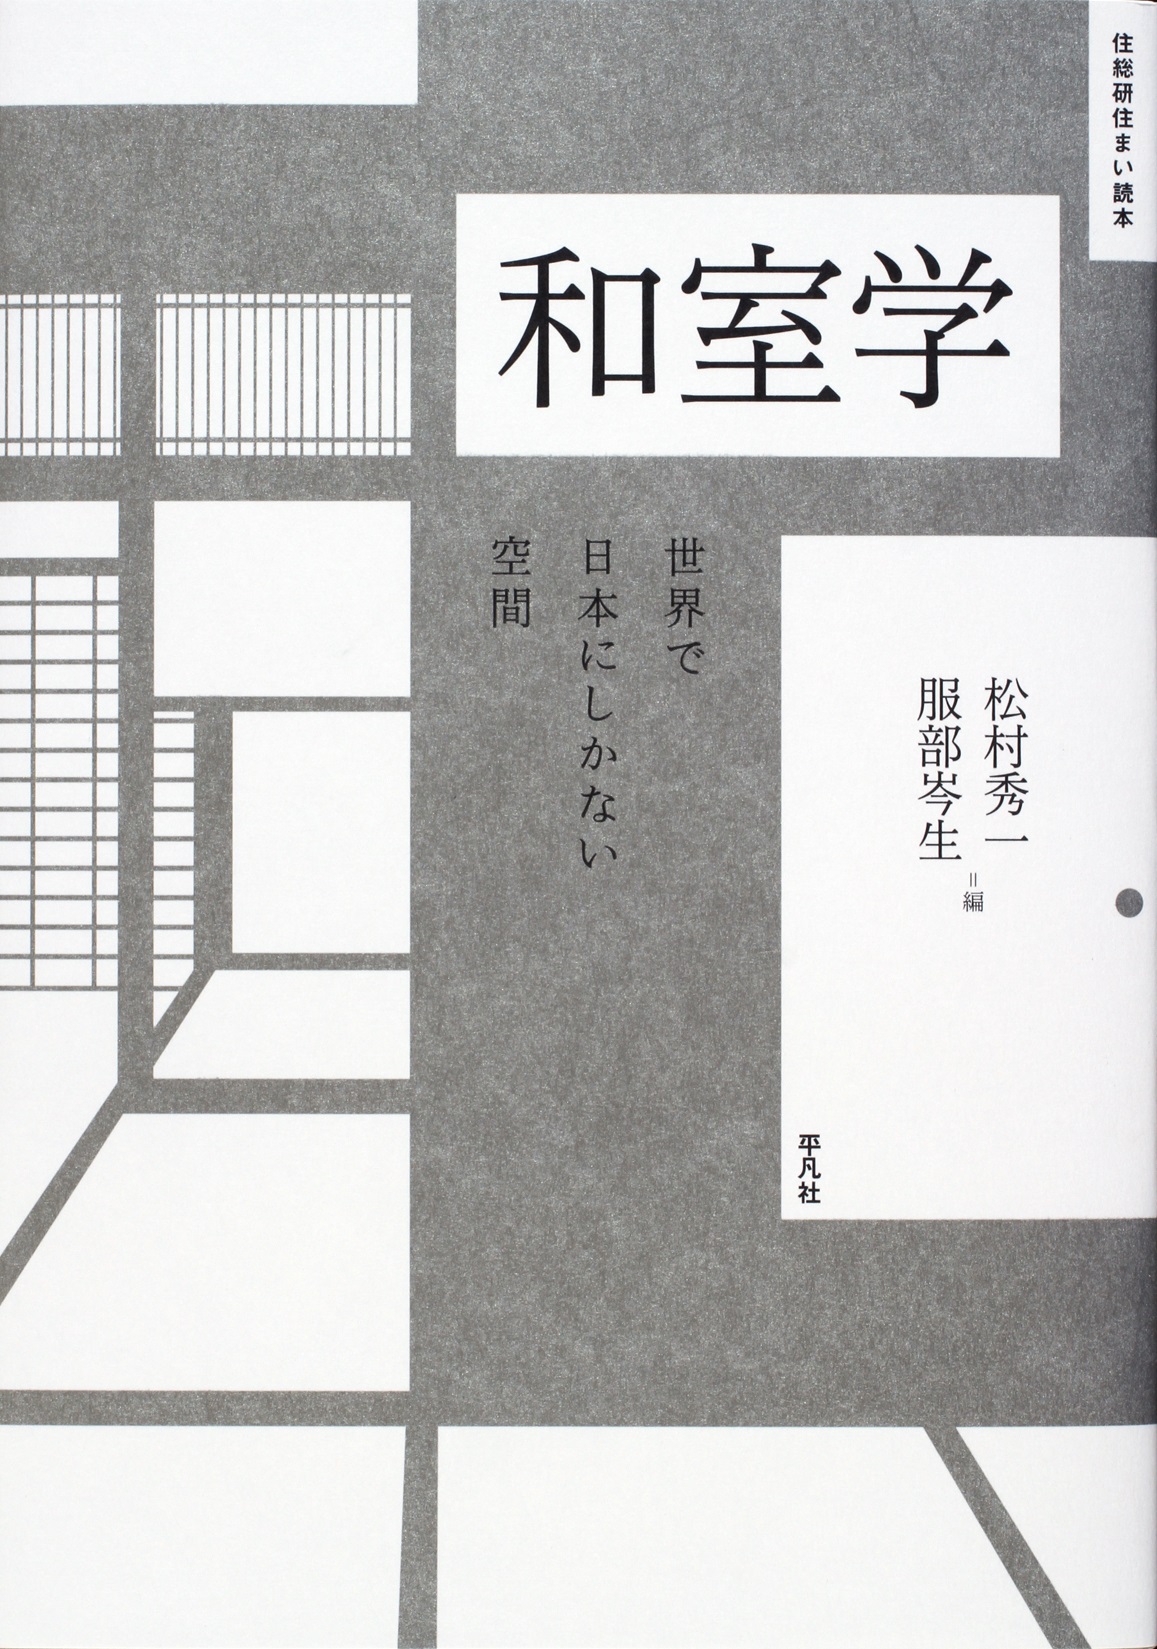 gray illustration of Japanese tatami room